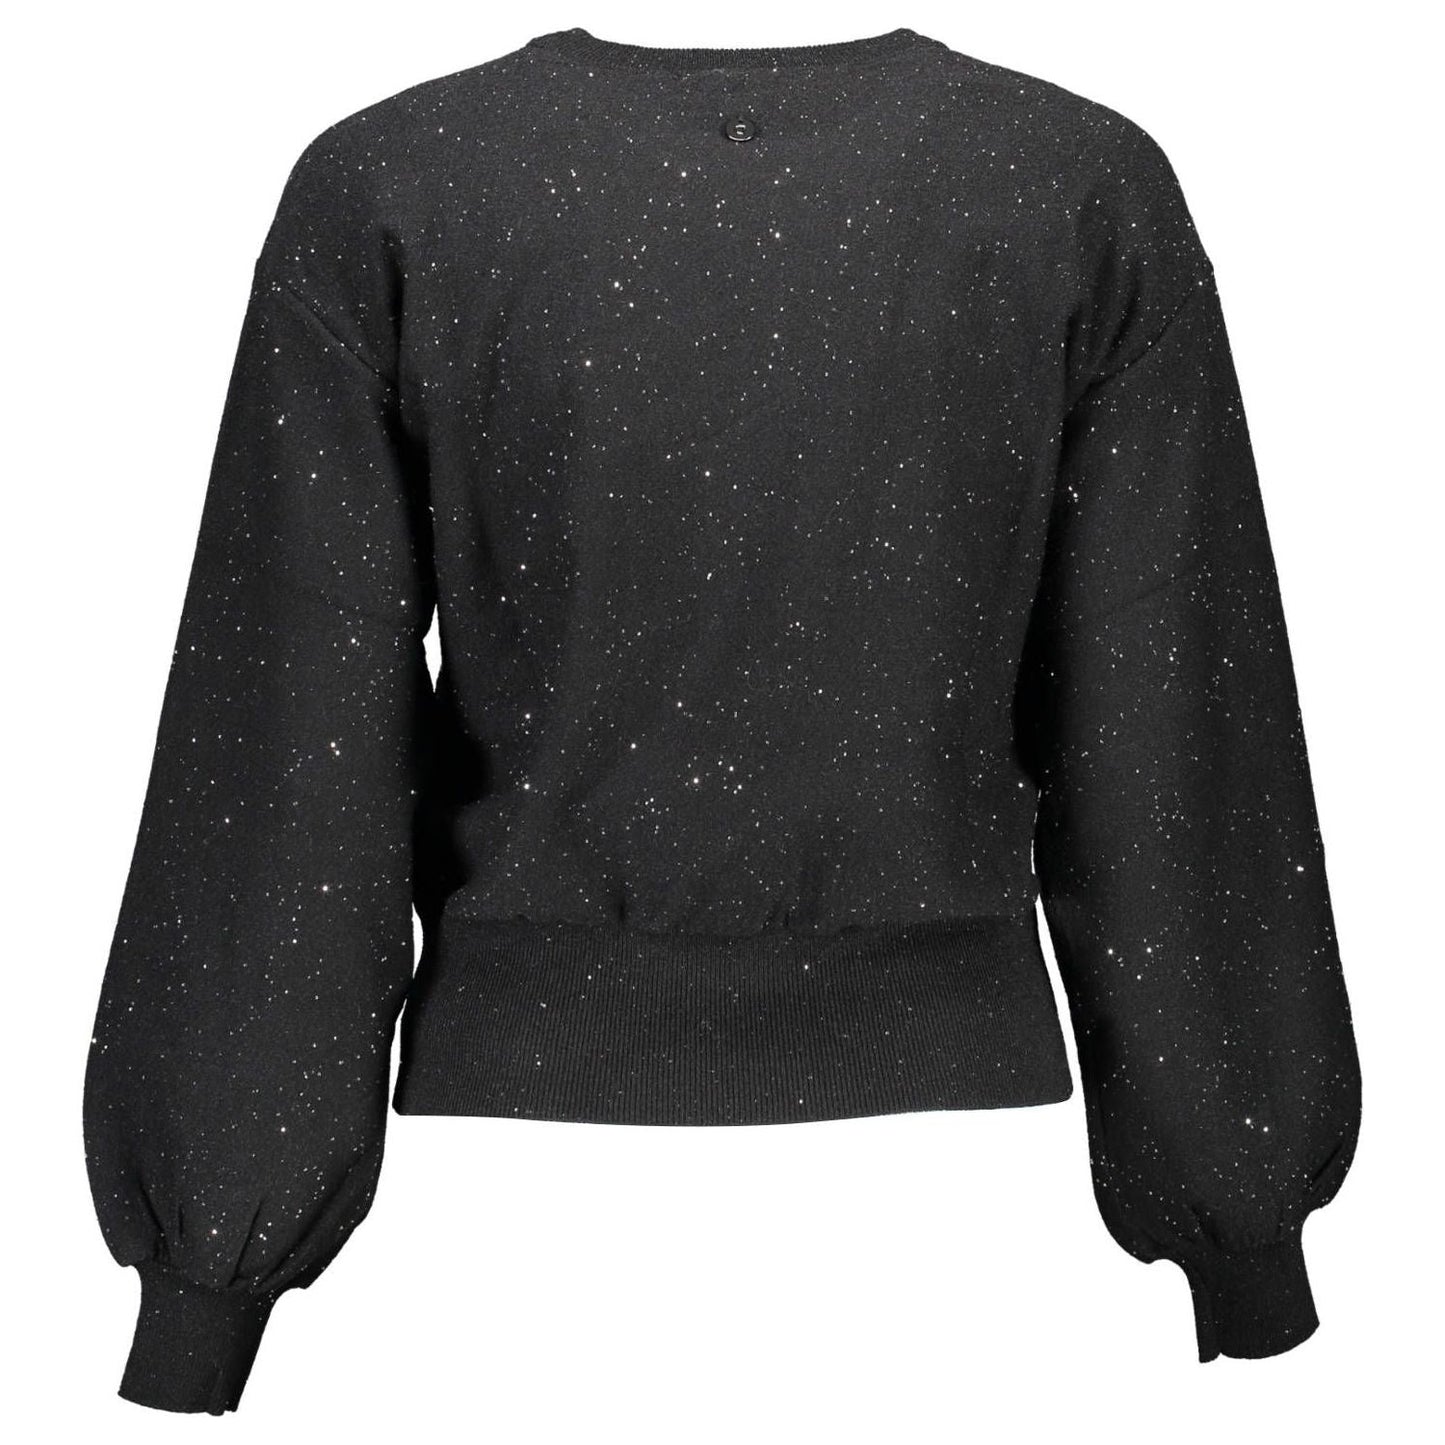 DesigualElegant Long-Sleeved Sweater with Contrasting AccentsMcRichard Designer Brands£99.00